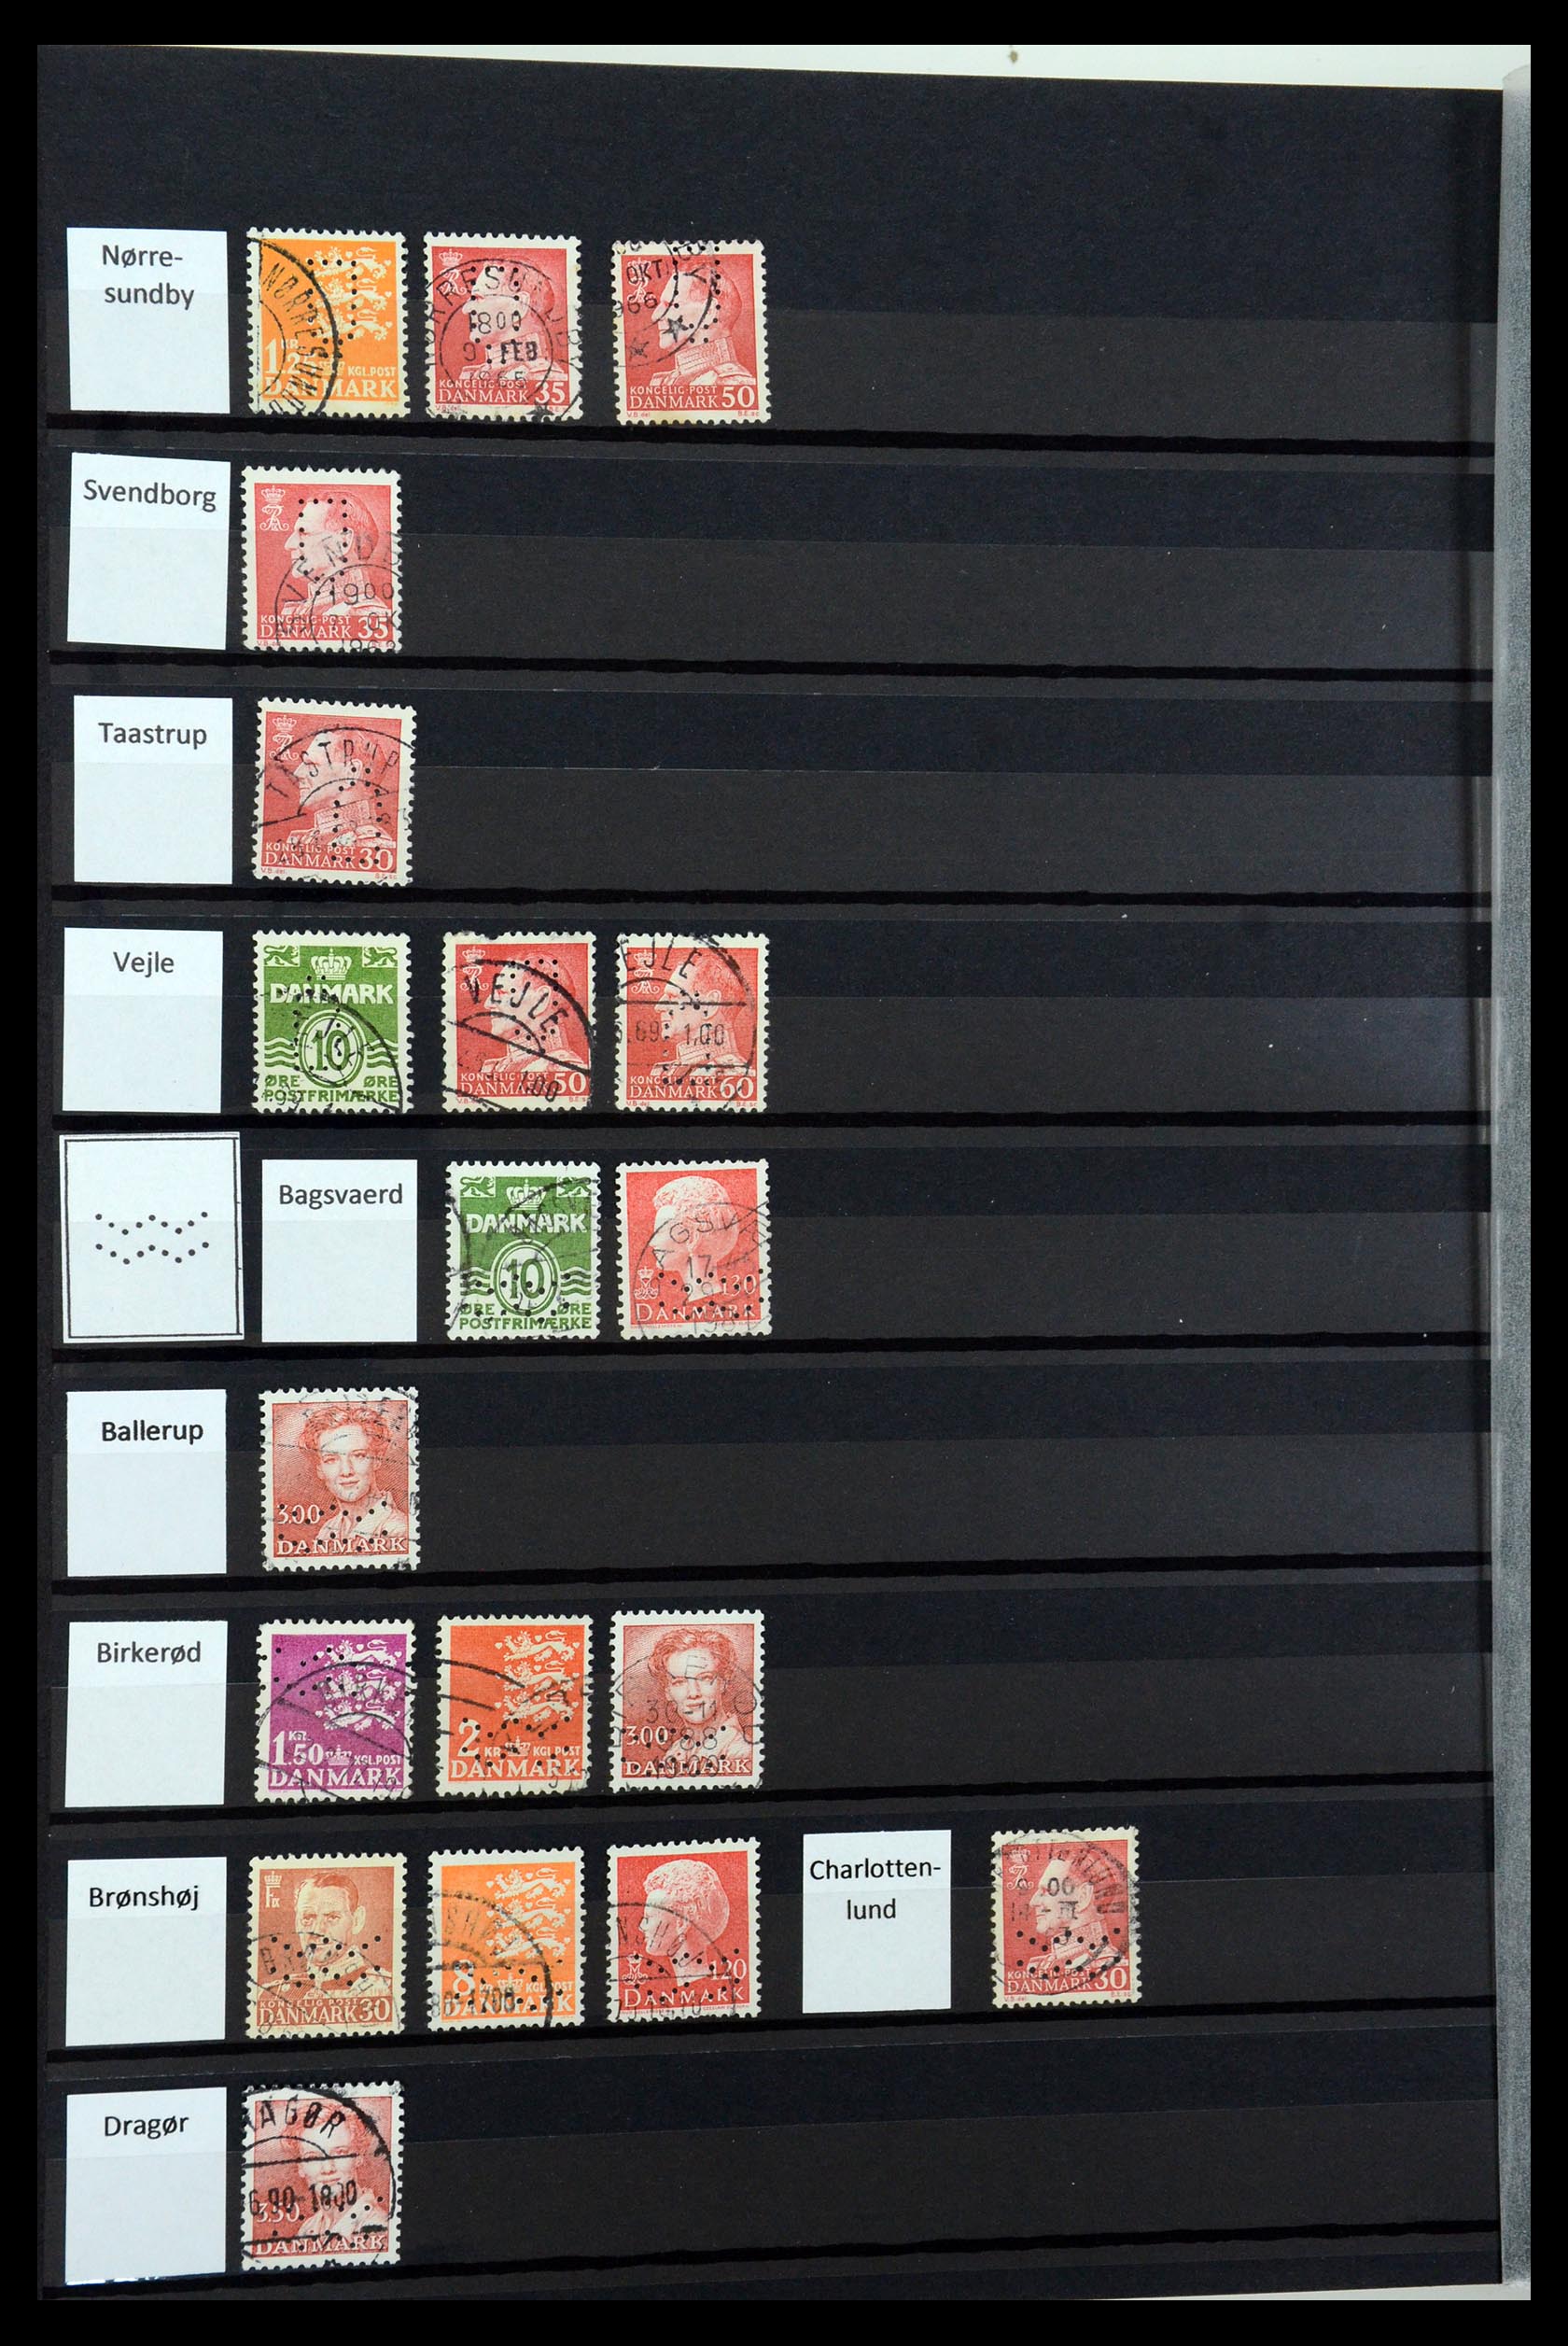 36396 113 - Stamp collection 36396 Denmark perfins.